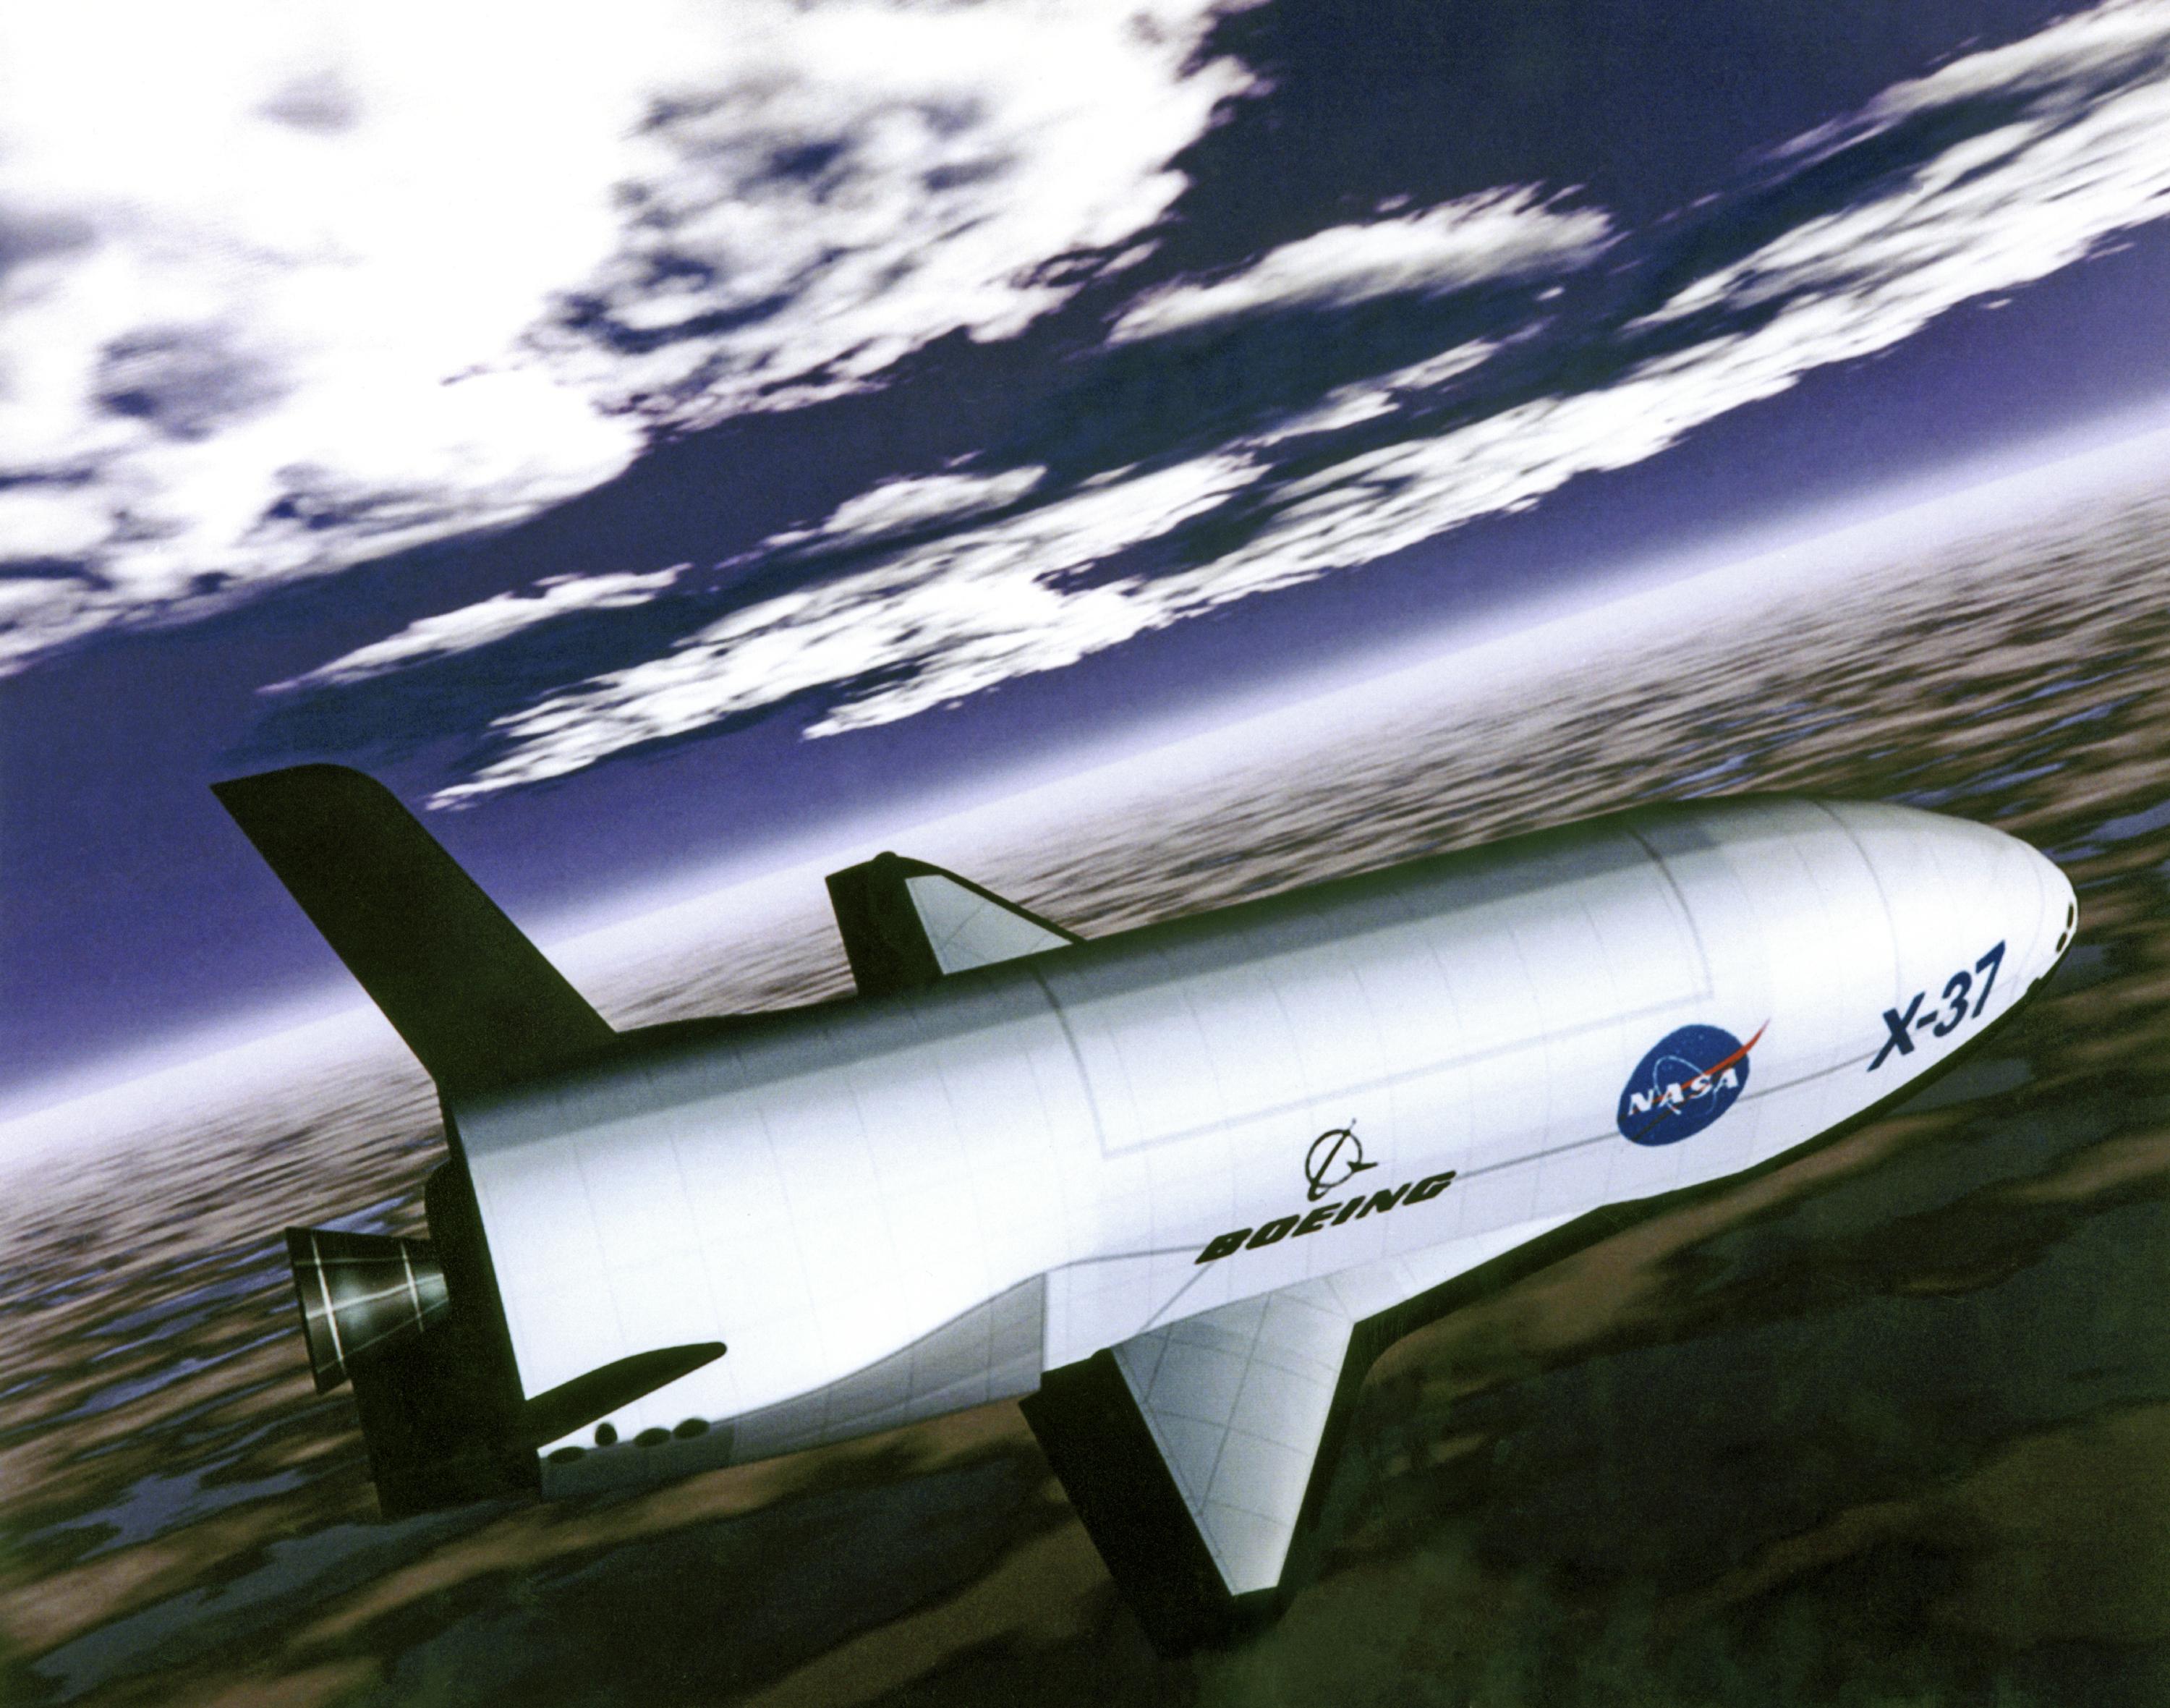 x-37b space plane